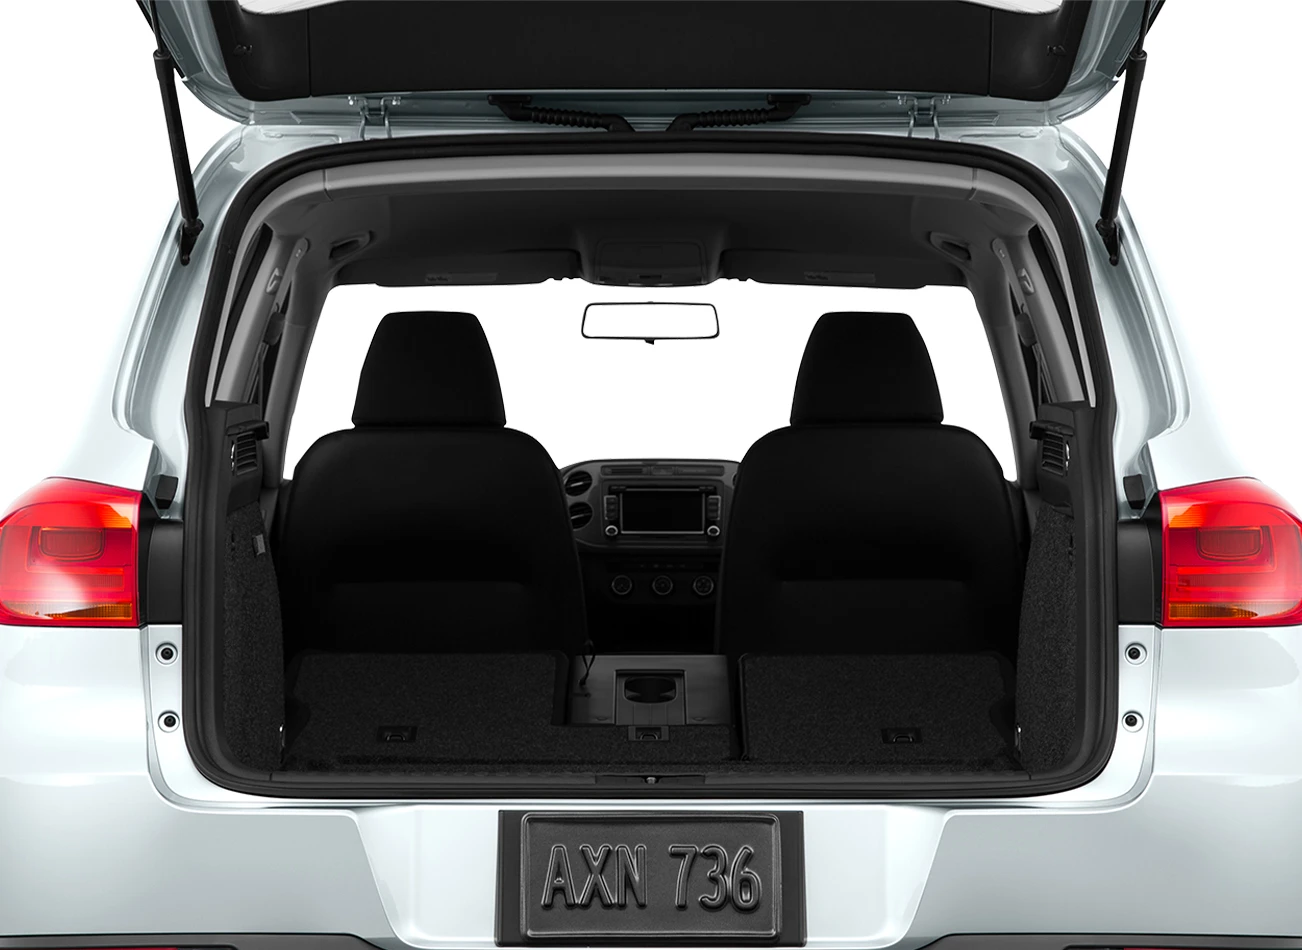 2015 Volkswagen Tiguan: Reviews, Photos, and More: Reasons to Buy #4 | CarMax